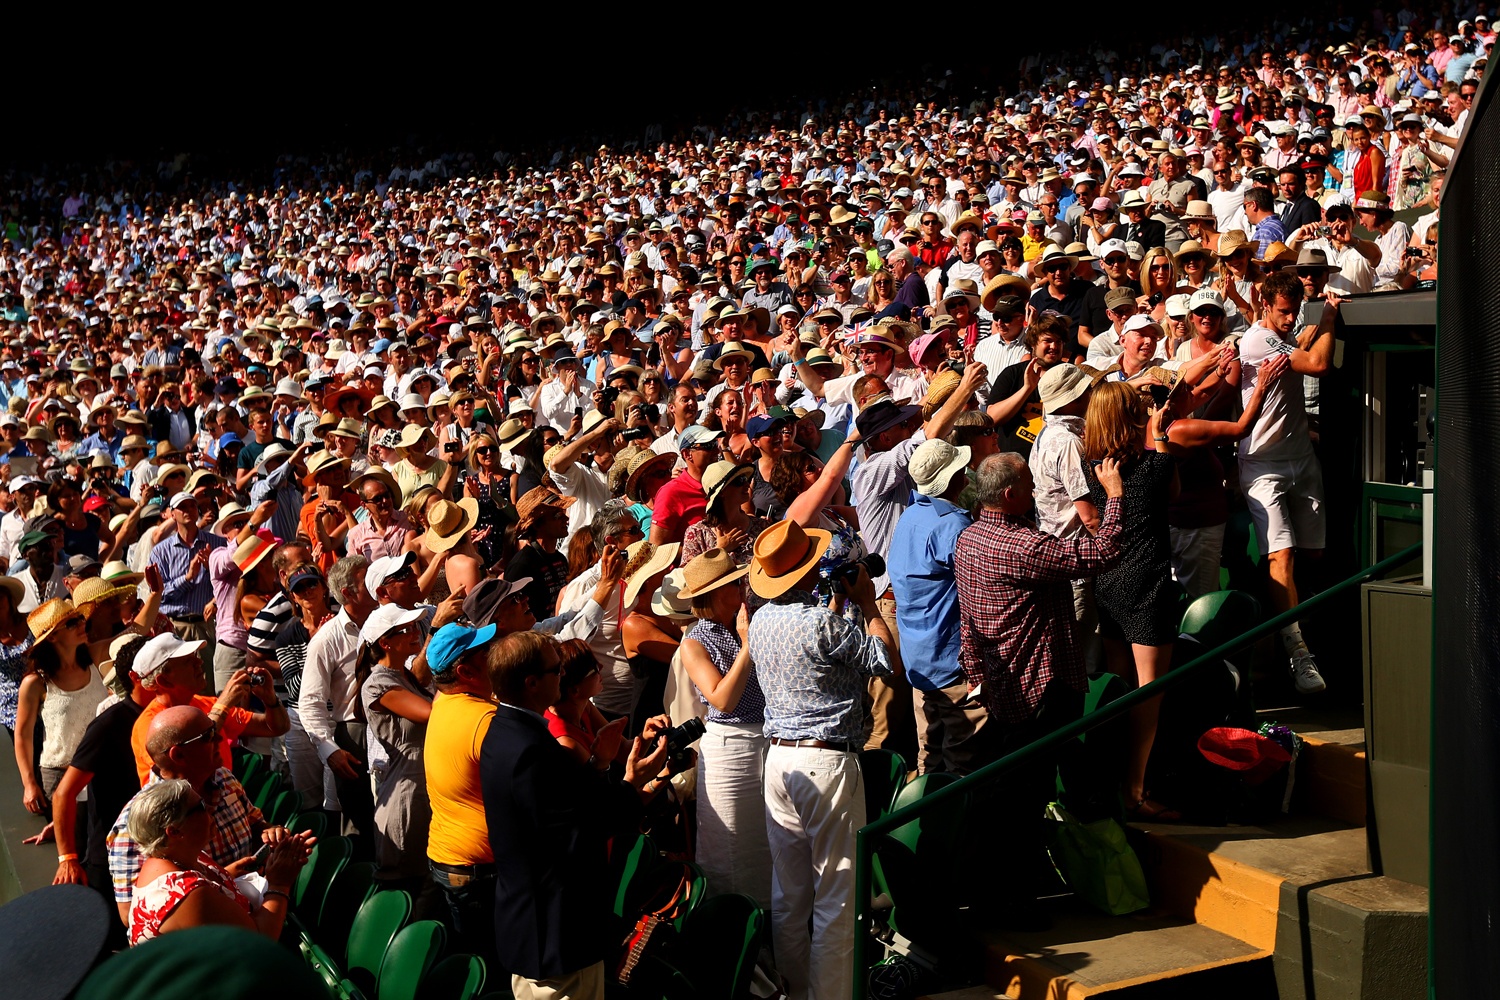 The Championships - Wimbledon 2013: Day Thirteen